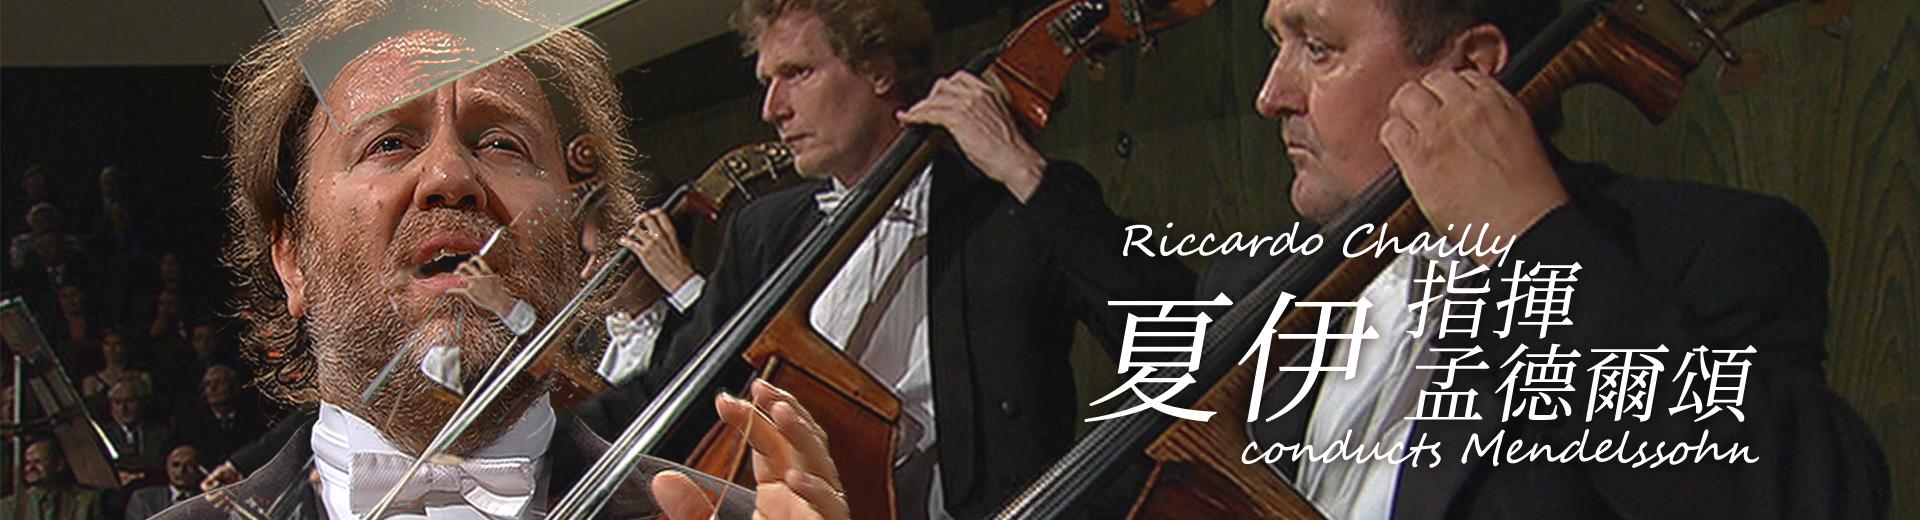 夏伊指揮孟德爾頌 Riccardo Chailly conducts Mendelssohn